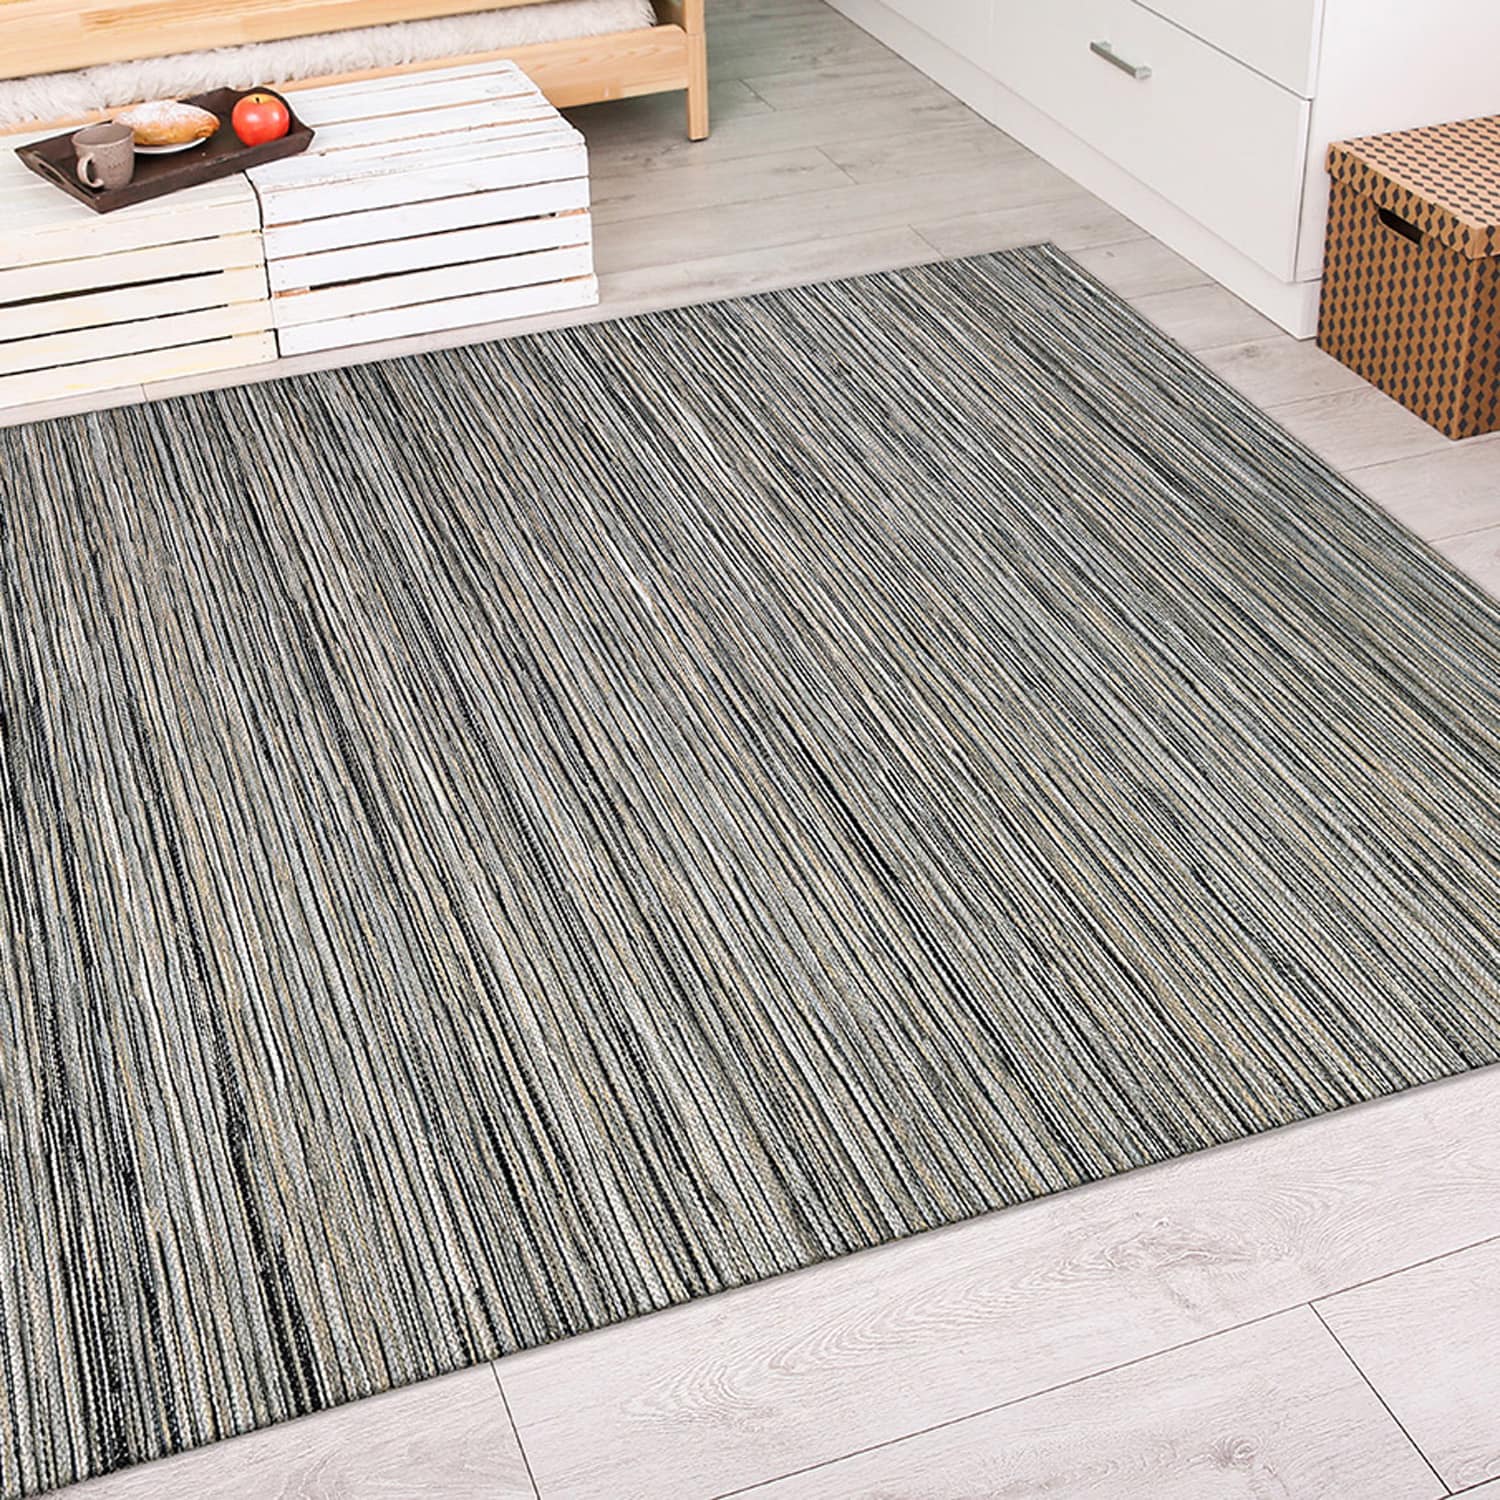 House, Home and More Skid-Resistant Carpet Indoor Area Rug Floor Mat - Praline Brown - 2 Feet x 3 Feet